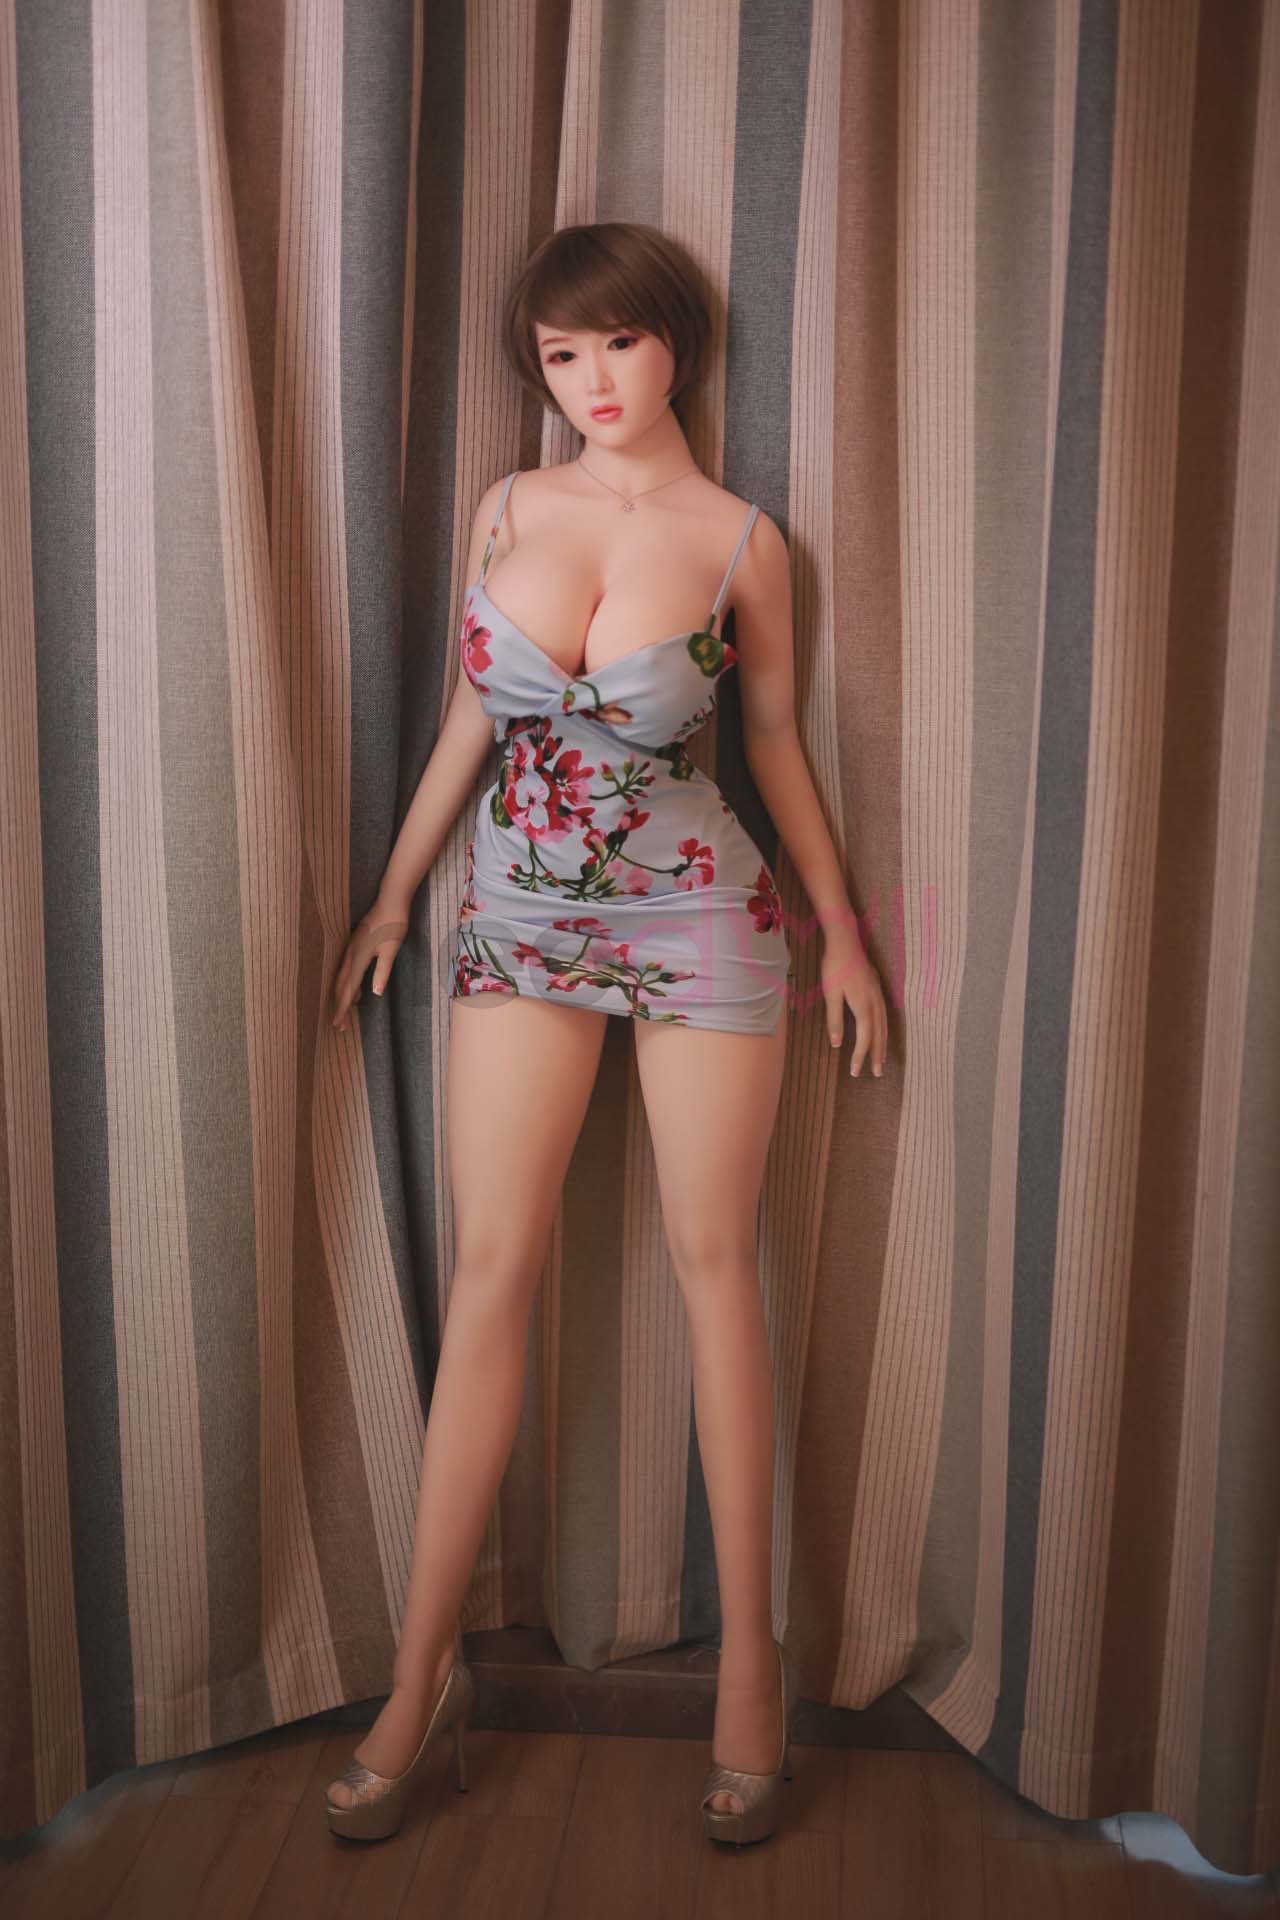 Neodoll Sugar Babe - Tobey - Realistic Sex Doll - 168cm - Natural